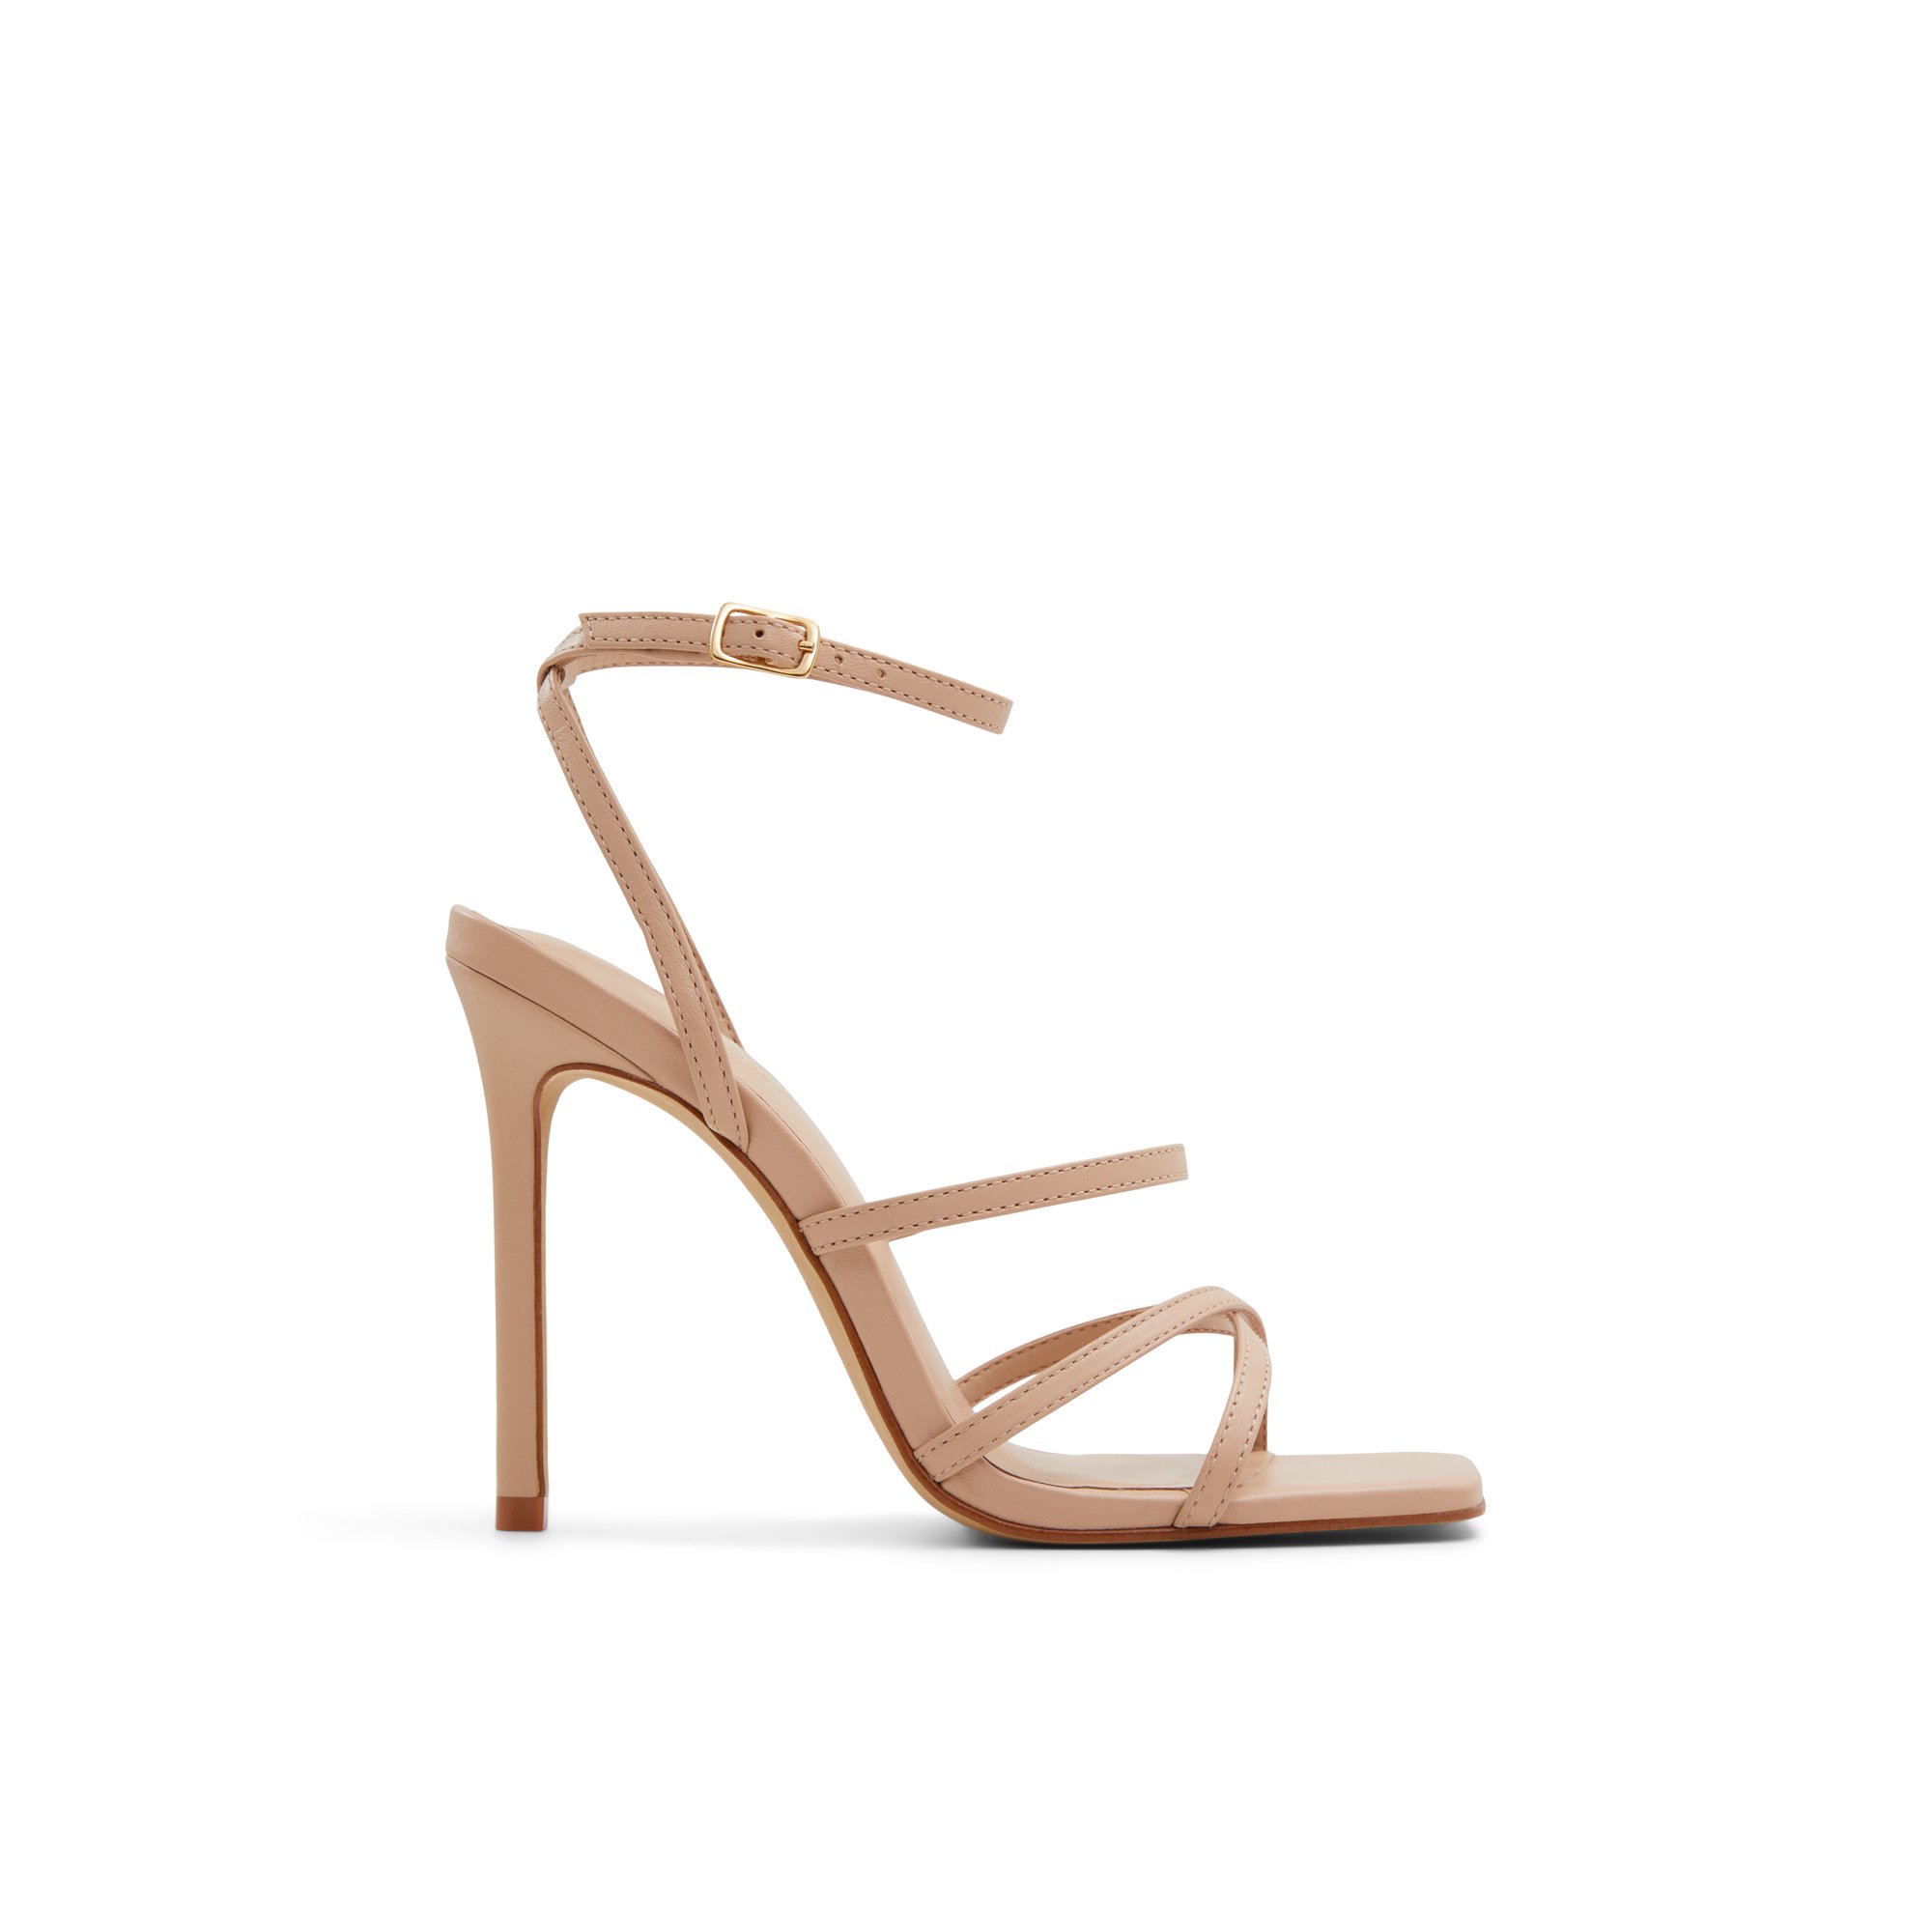 ALDO Galoi - Women's Sandals Strappy - Beige